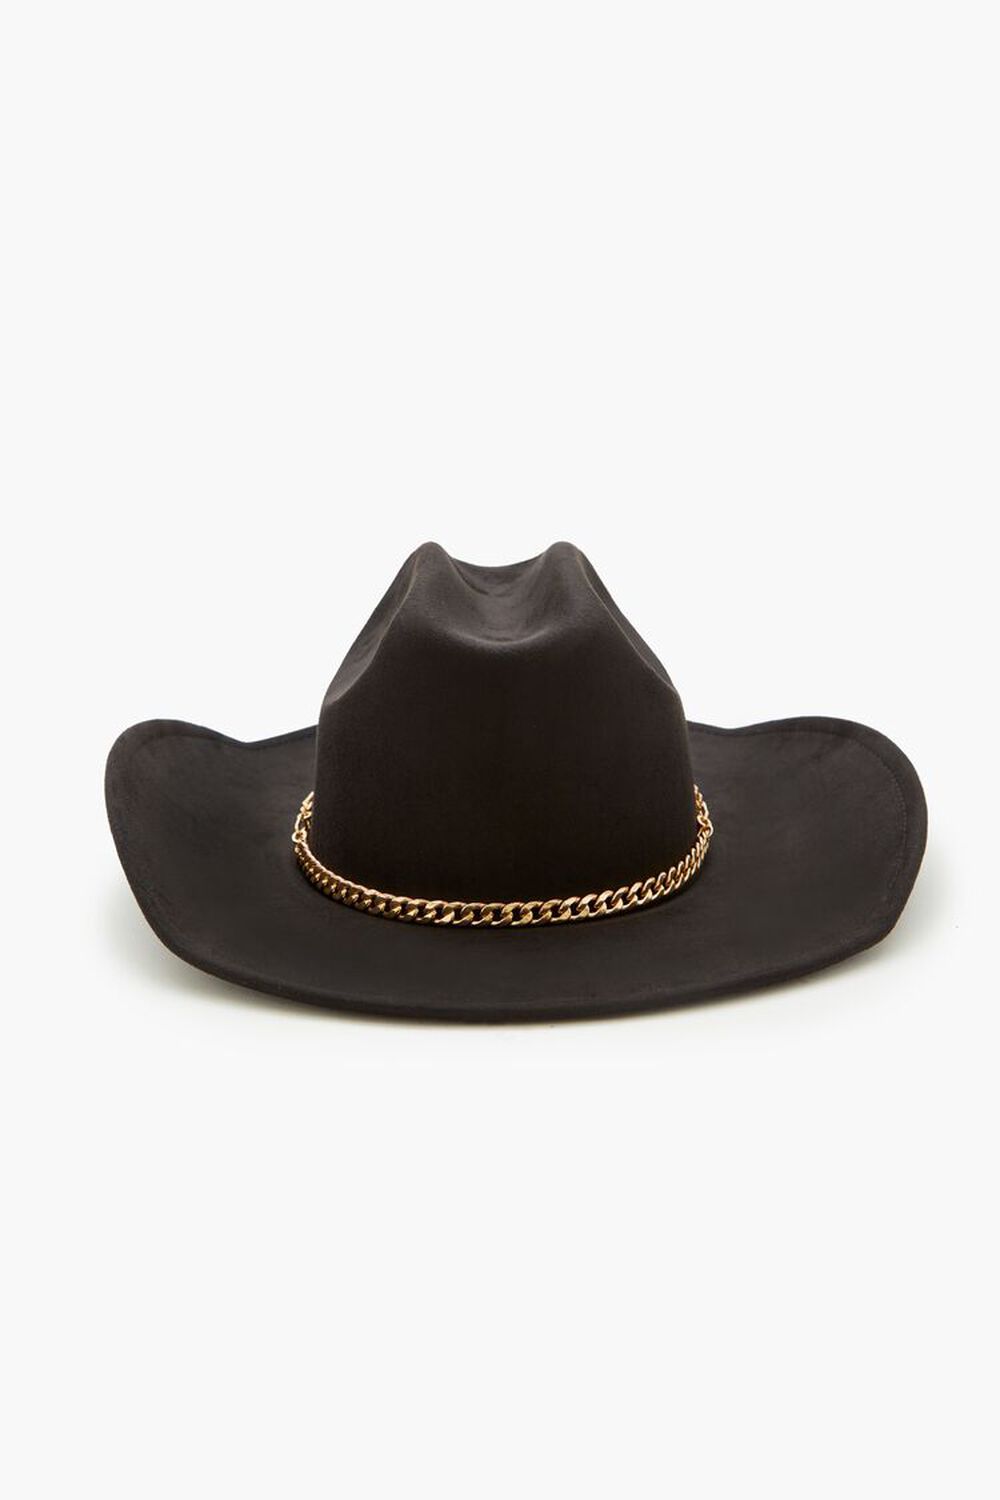 BLACK/GOLD Chain-Trim Brushed Cowboy Hat, image 3